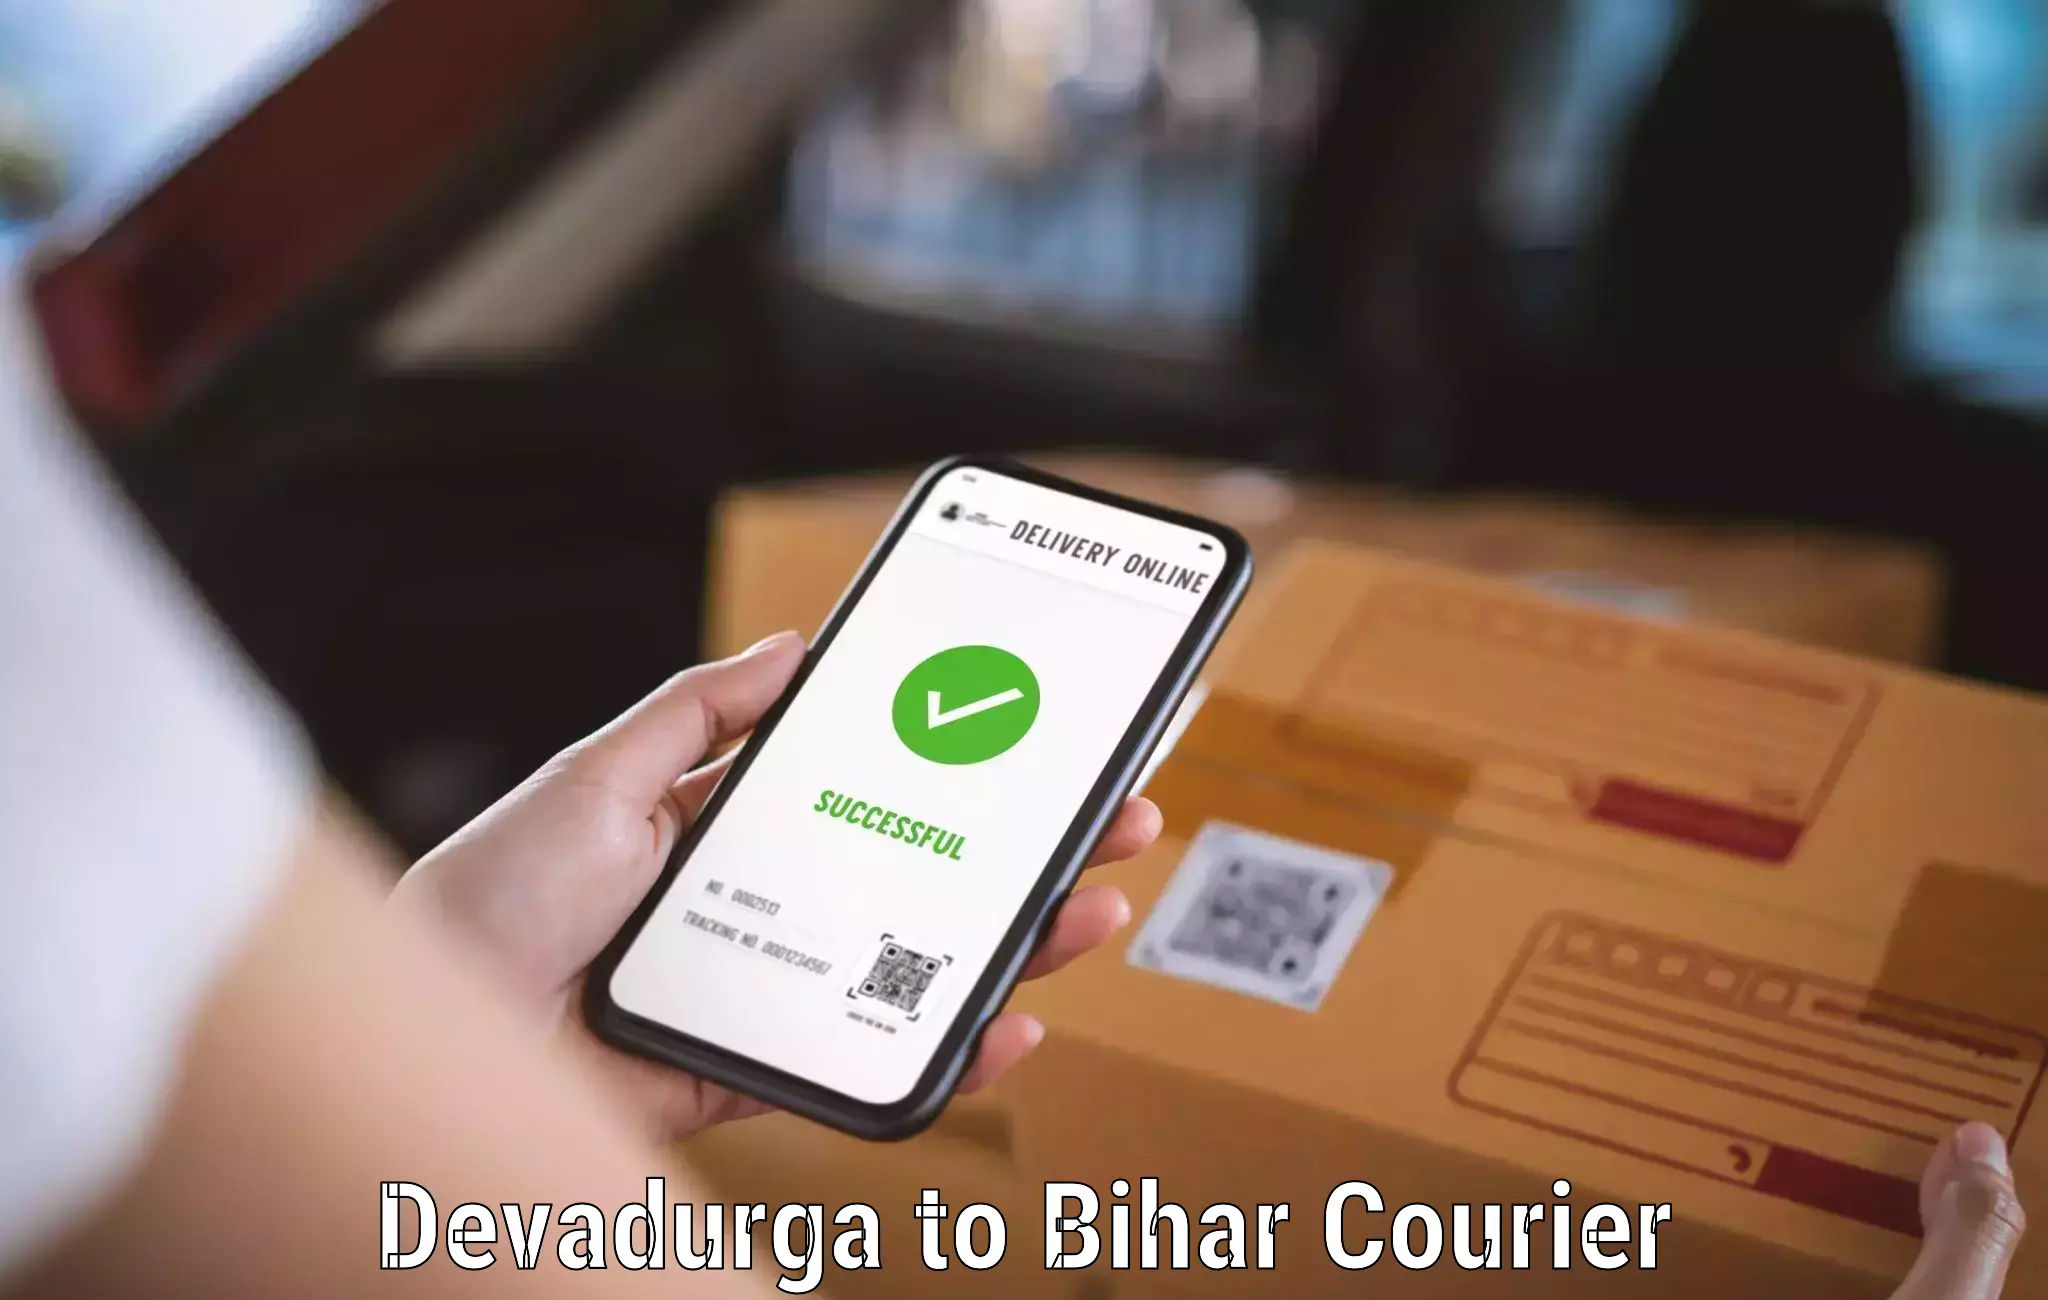 Urgent courier needs Devadurga to Dhaka